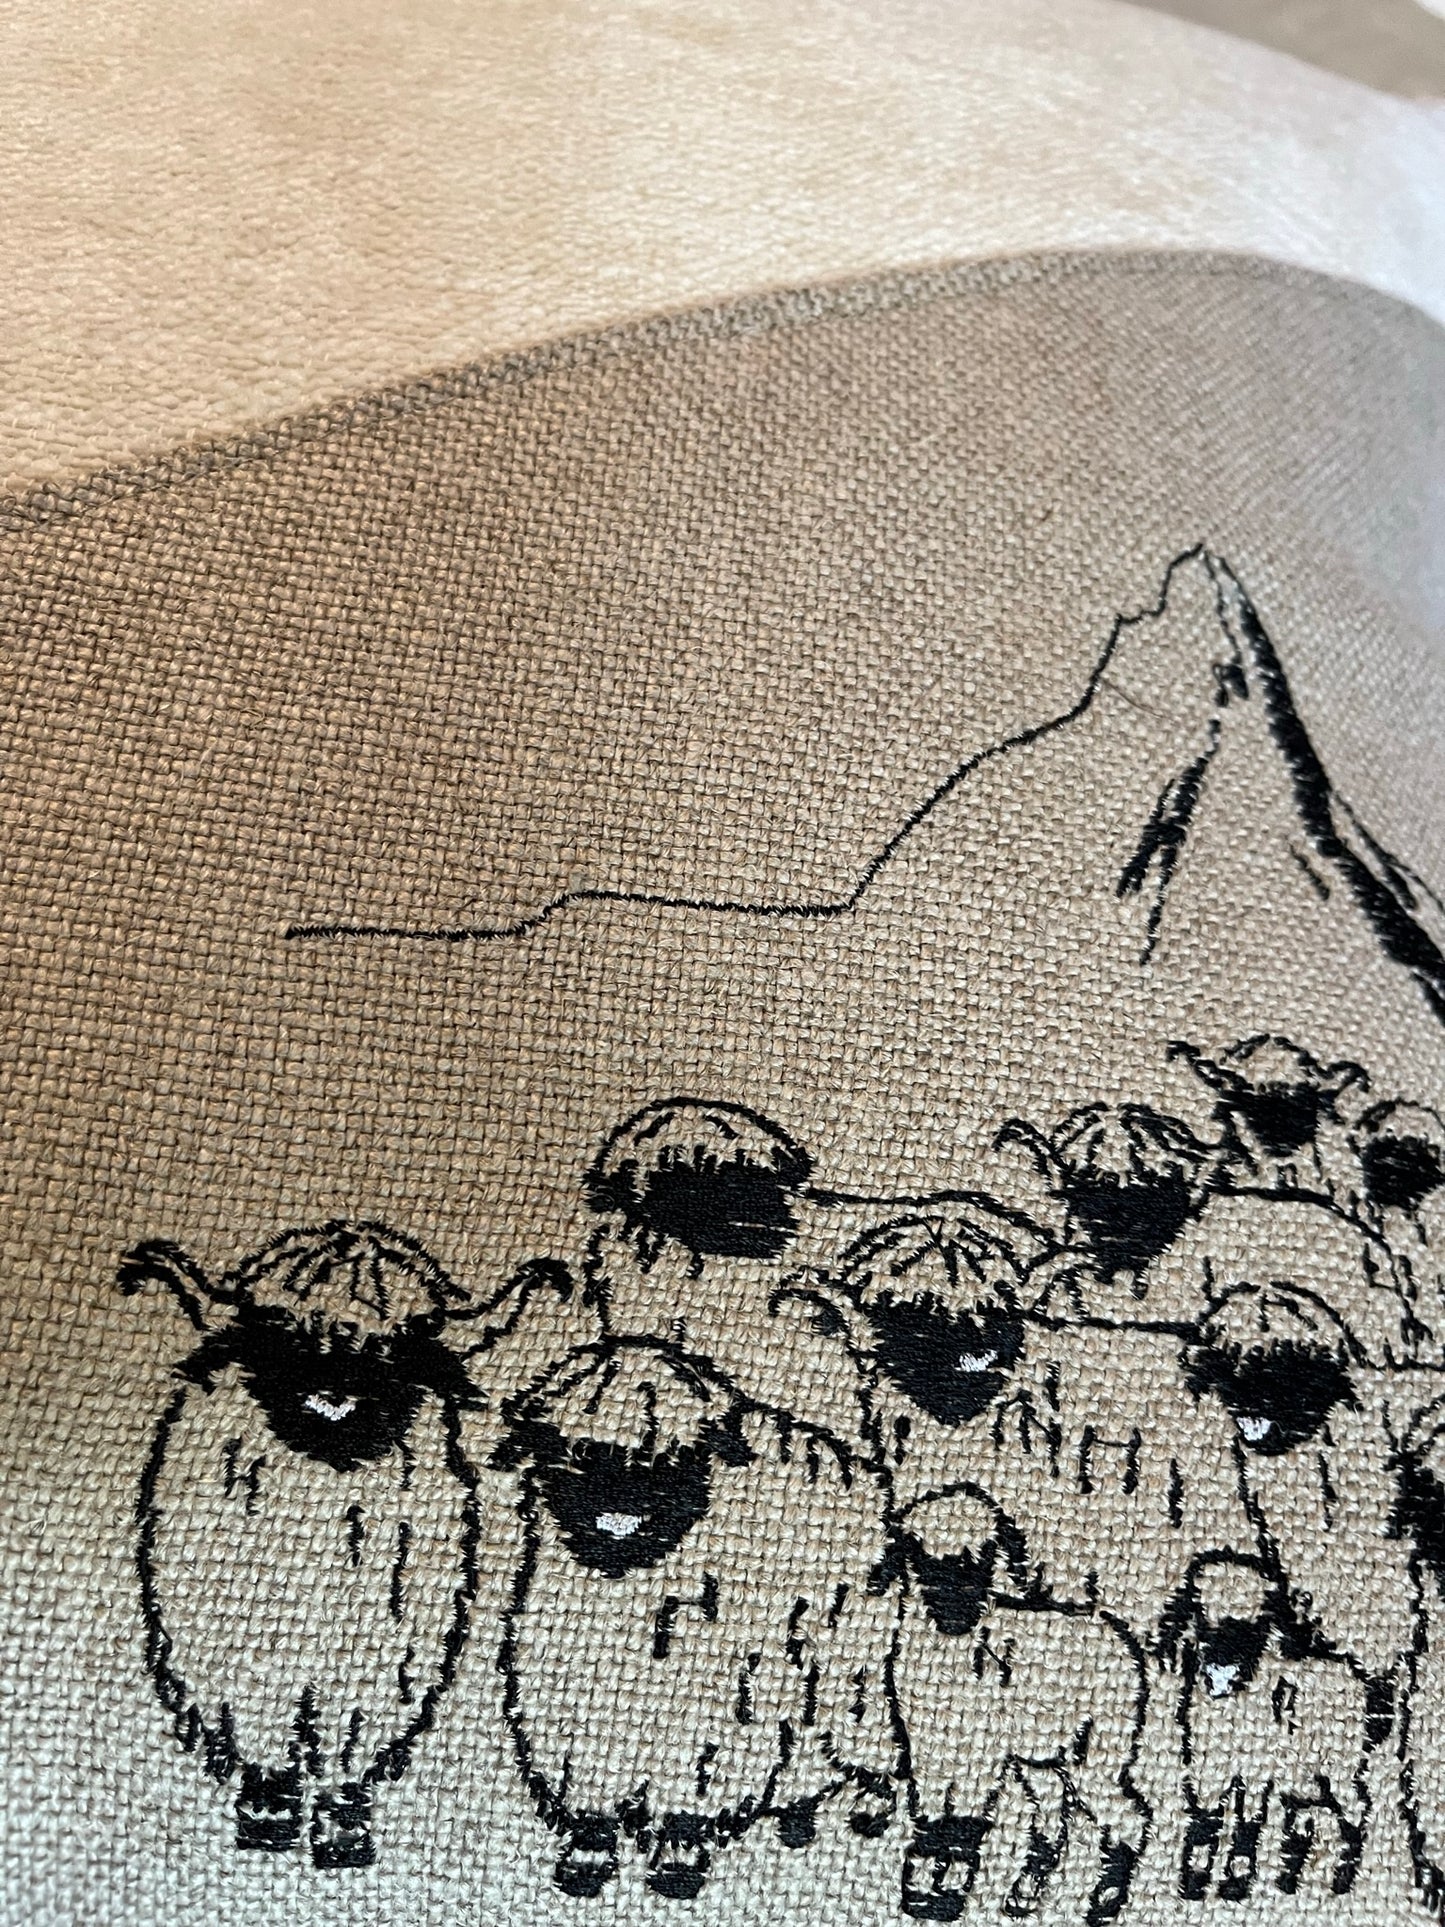 Blacknose Sheep with Matterhorn cushion cover, cream